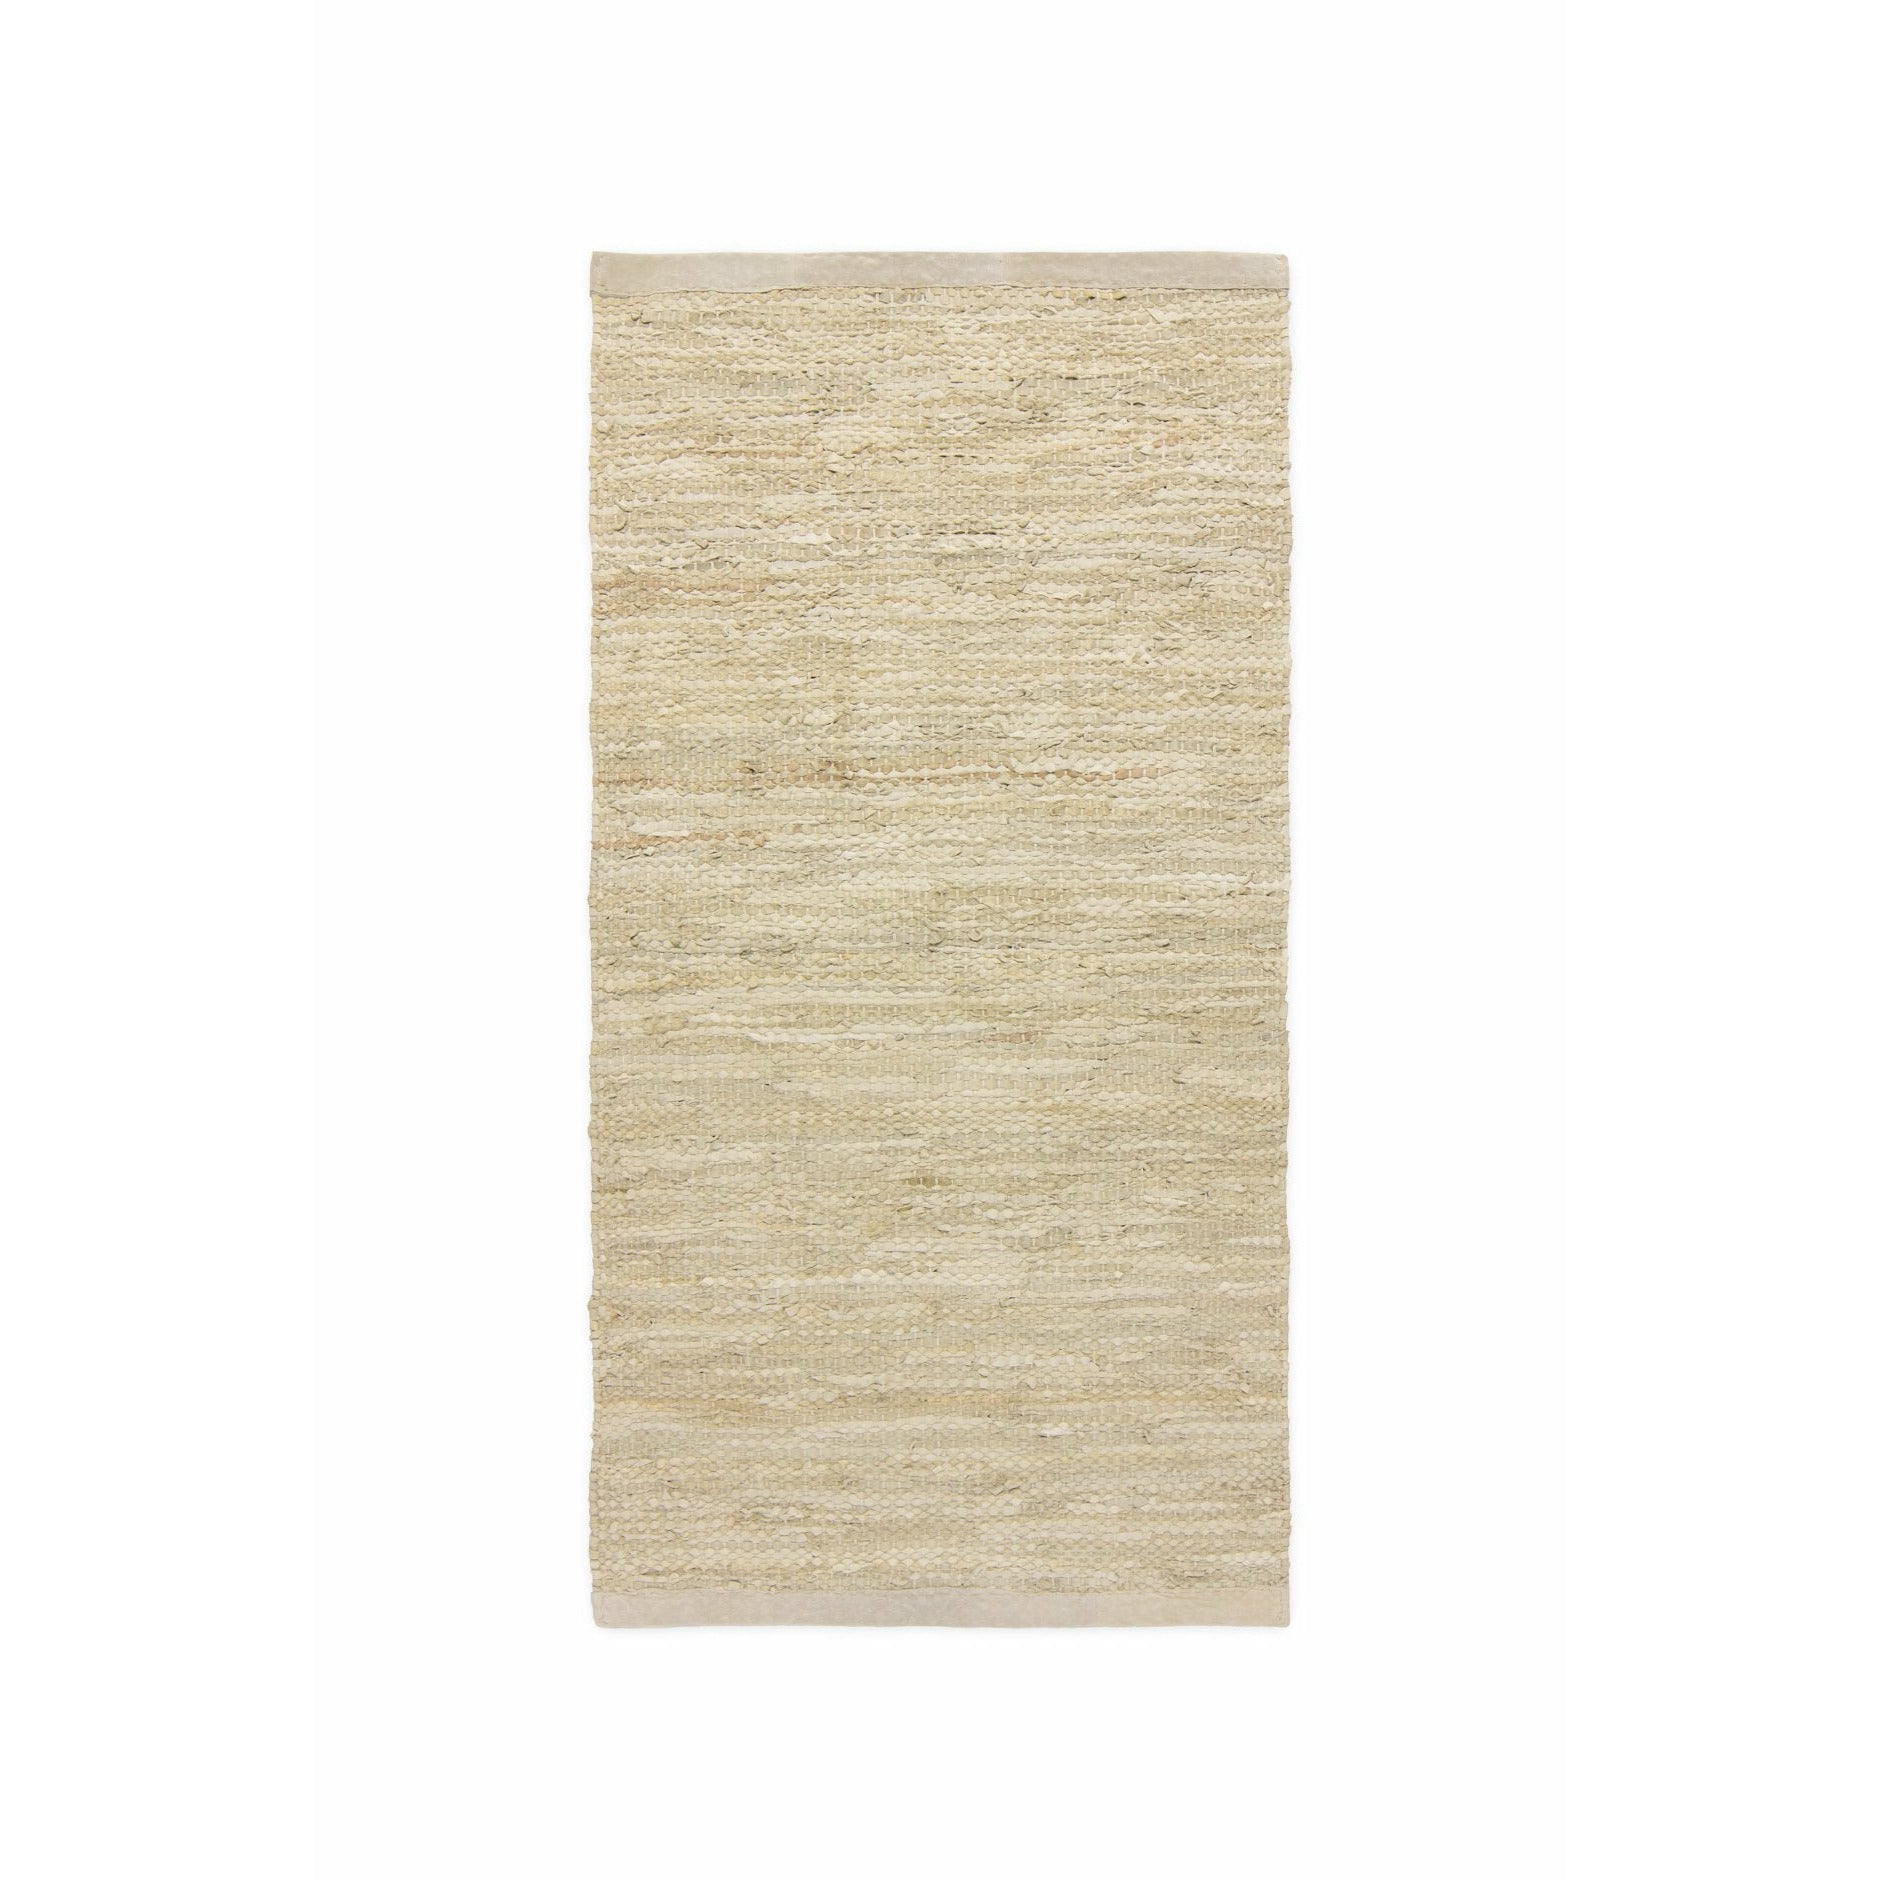 Tappeto tappeto in pelle solida beige, 60 x 90 cm